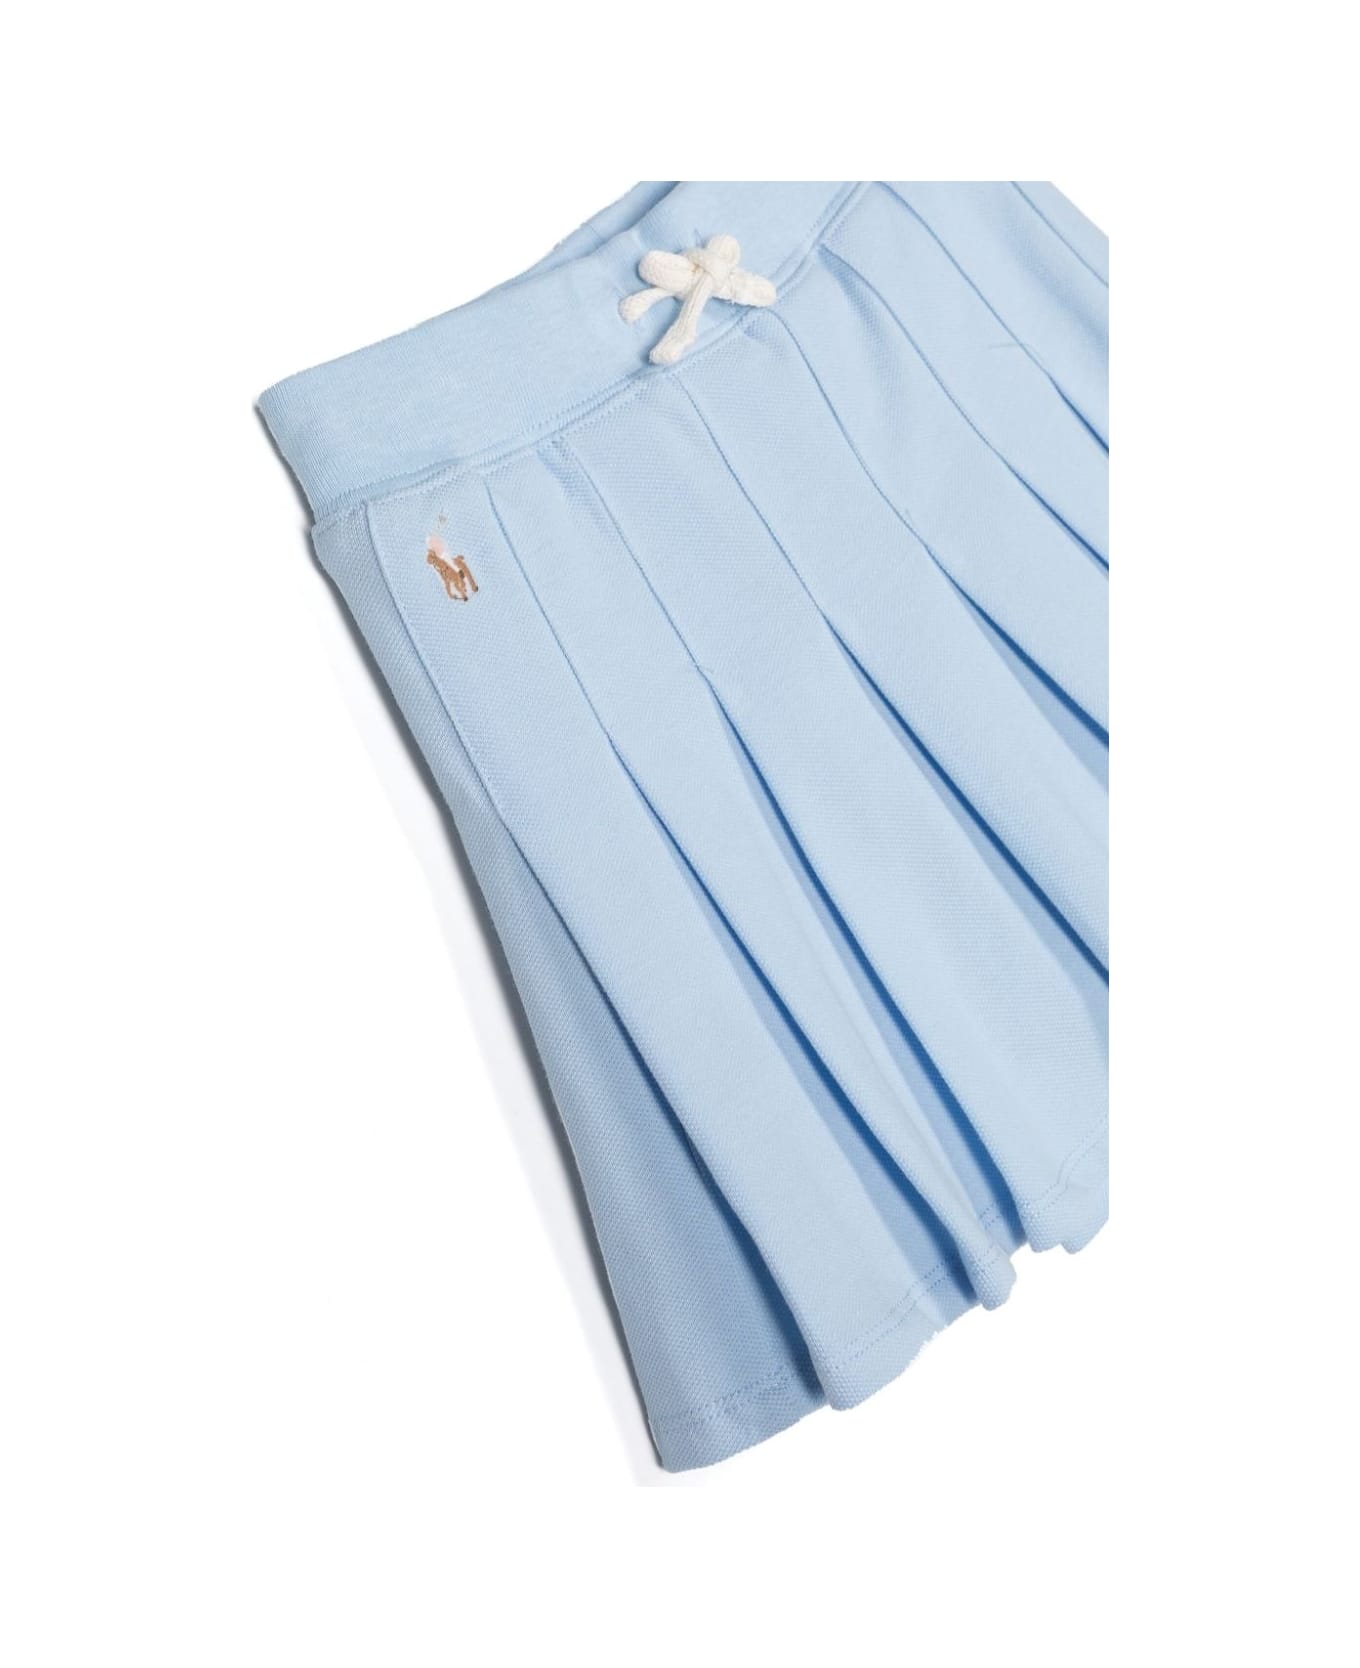 Ralph Lauren Light Blue Pleated Mini Skirt With Drawstring - Blue ボトムス